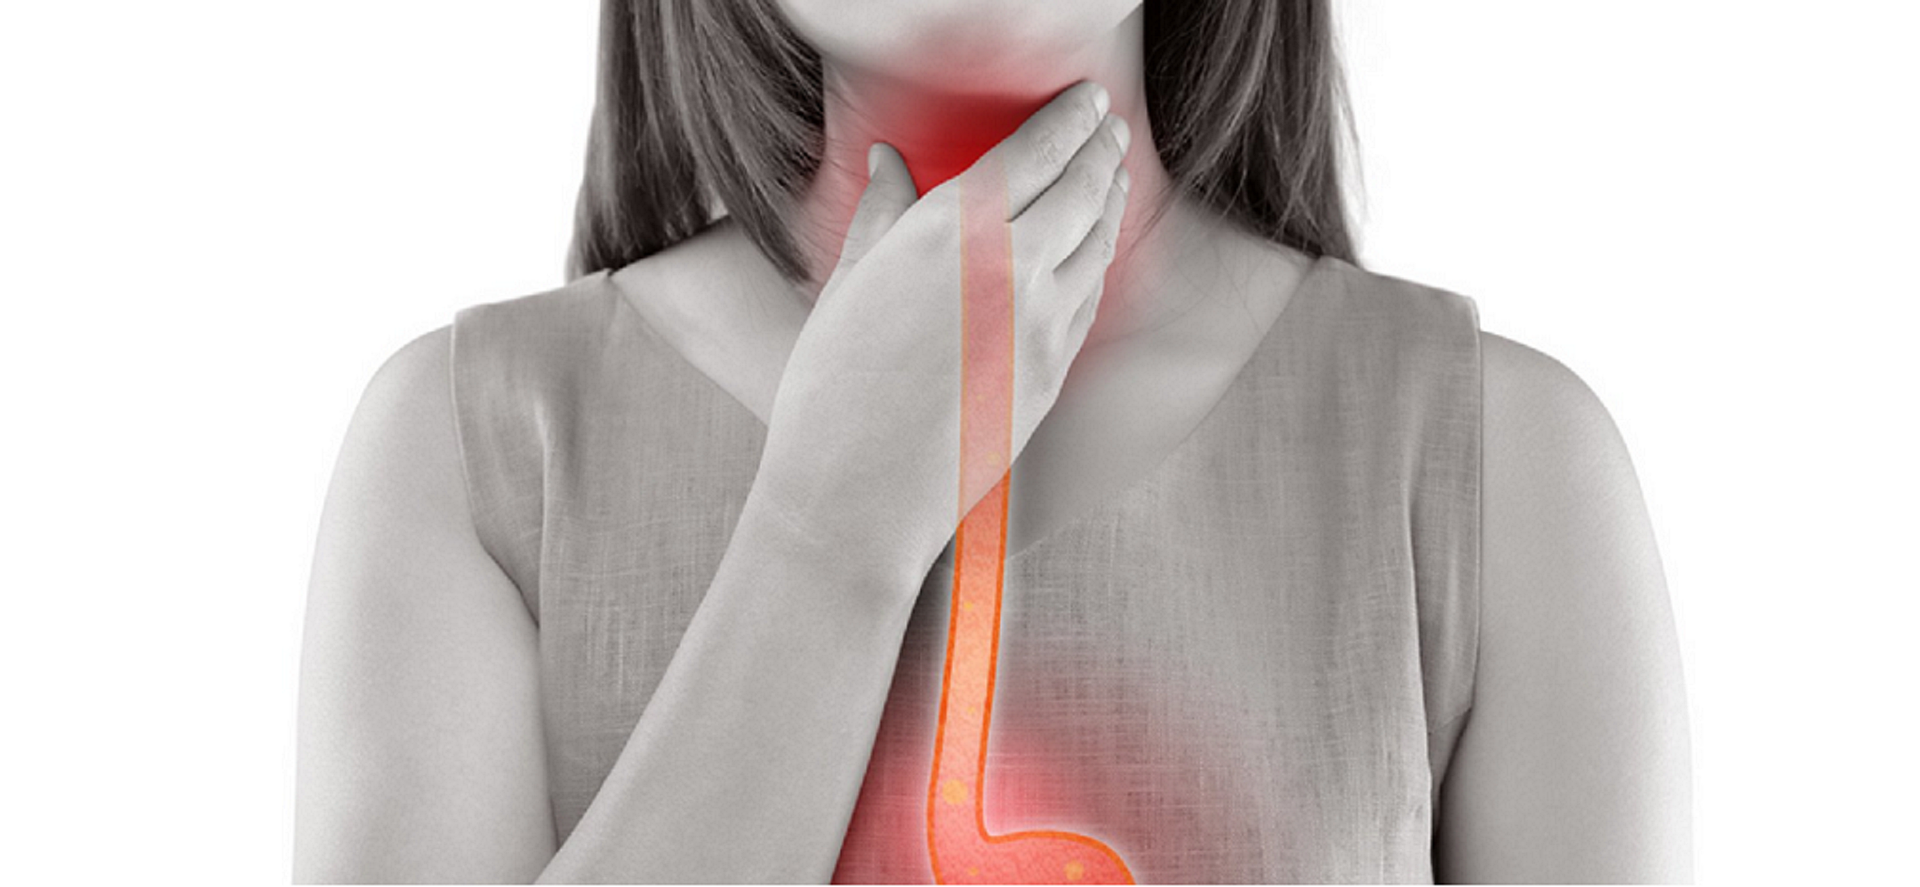 Lancet子刊：放疗对晚期食管癌患者的<font color="red">吞咽困难</font>无任何帮助！